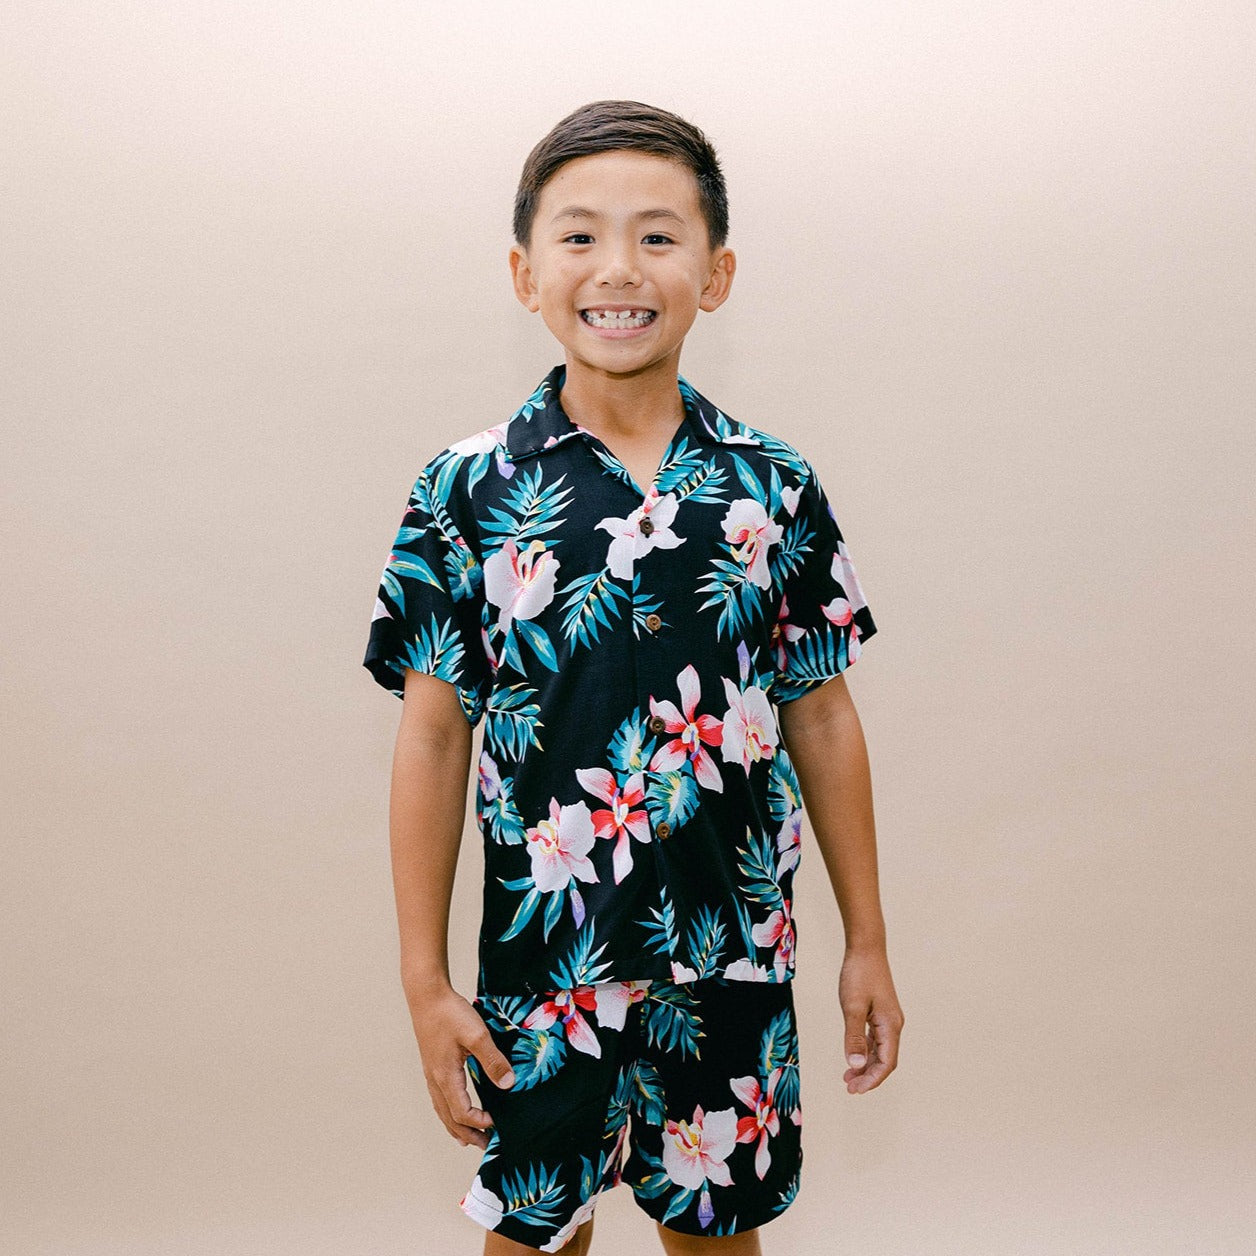 New Orchid Boy's Aloha Shirt and Shorts Set, Made in Hawaii